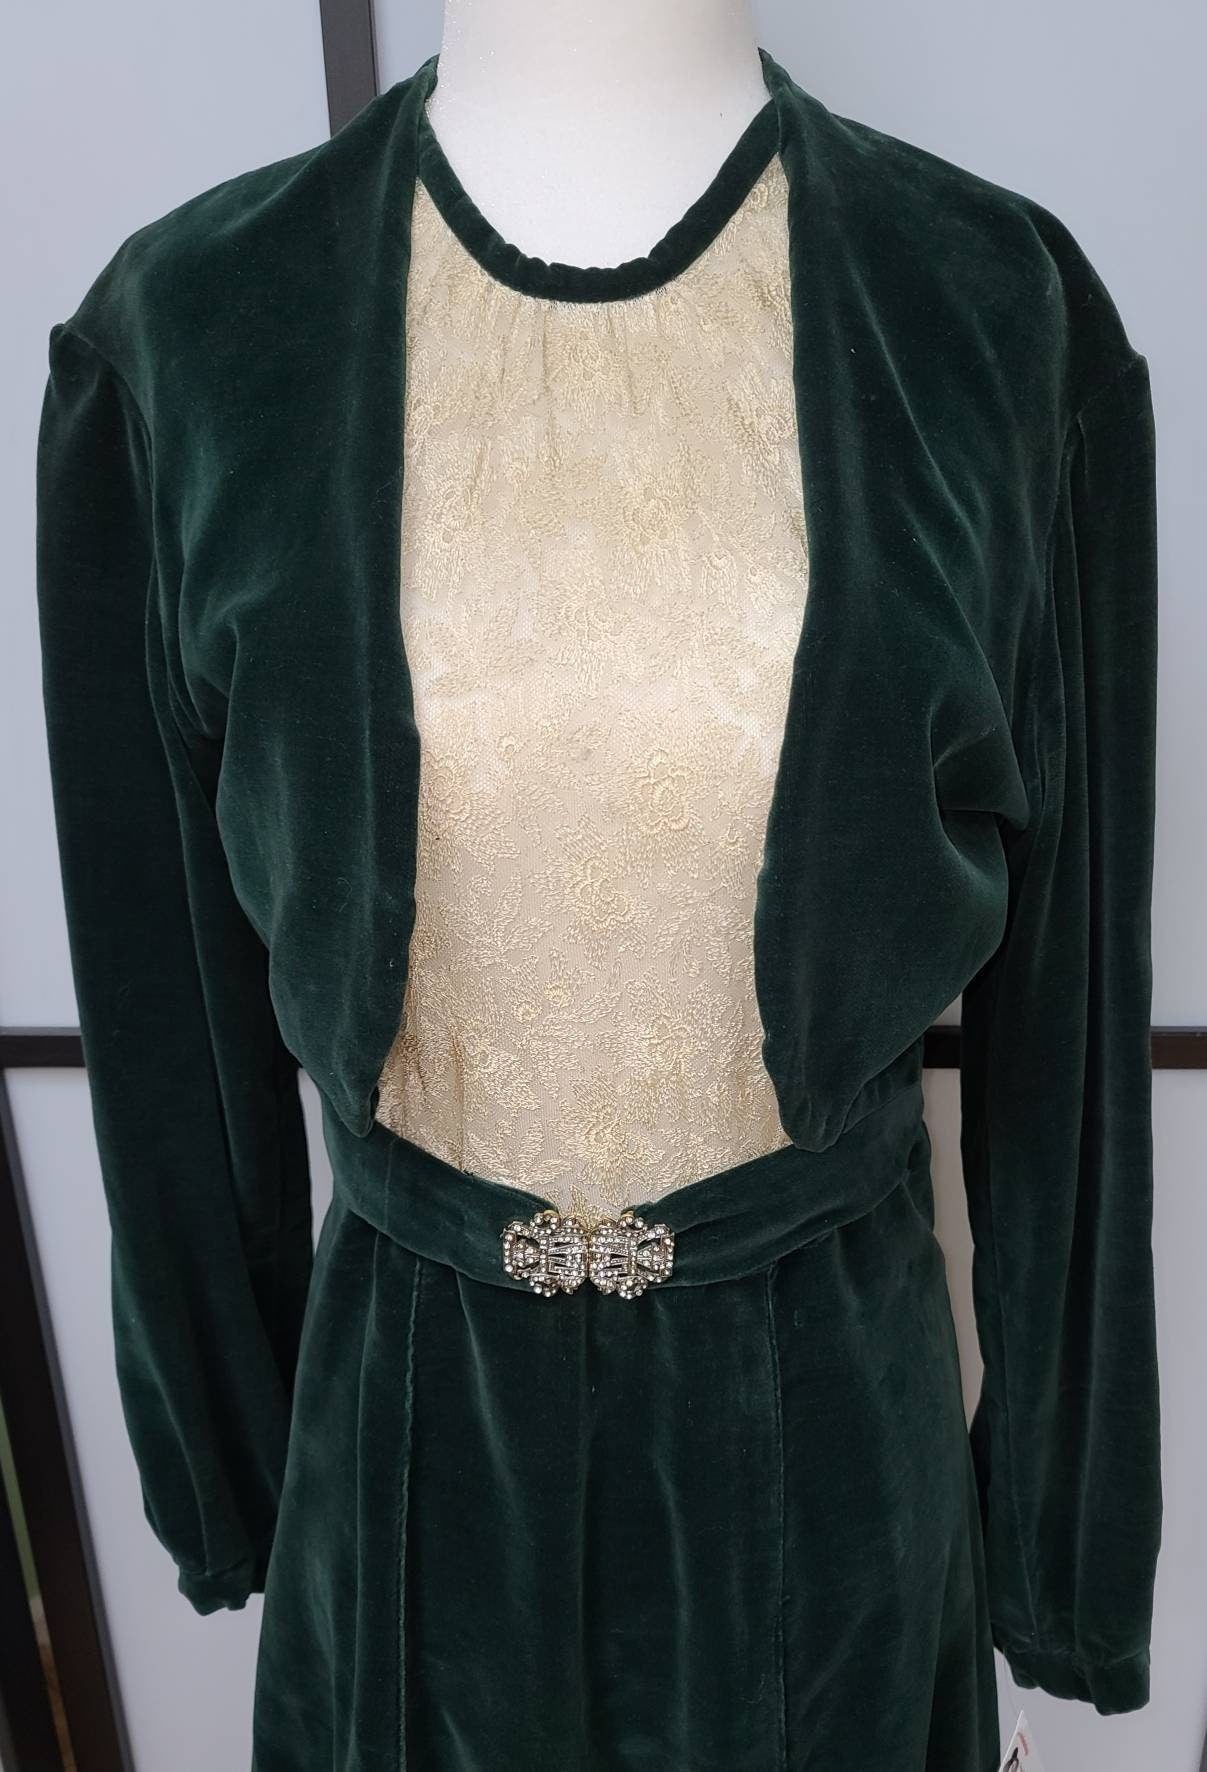 Vintage 1930s Dress Green Velvet Dress Cream Lace Front Panel Built In Bolero Rhinestone Belt German Art Deco S M